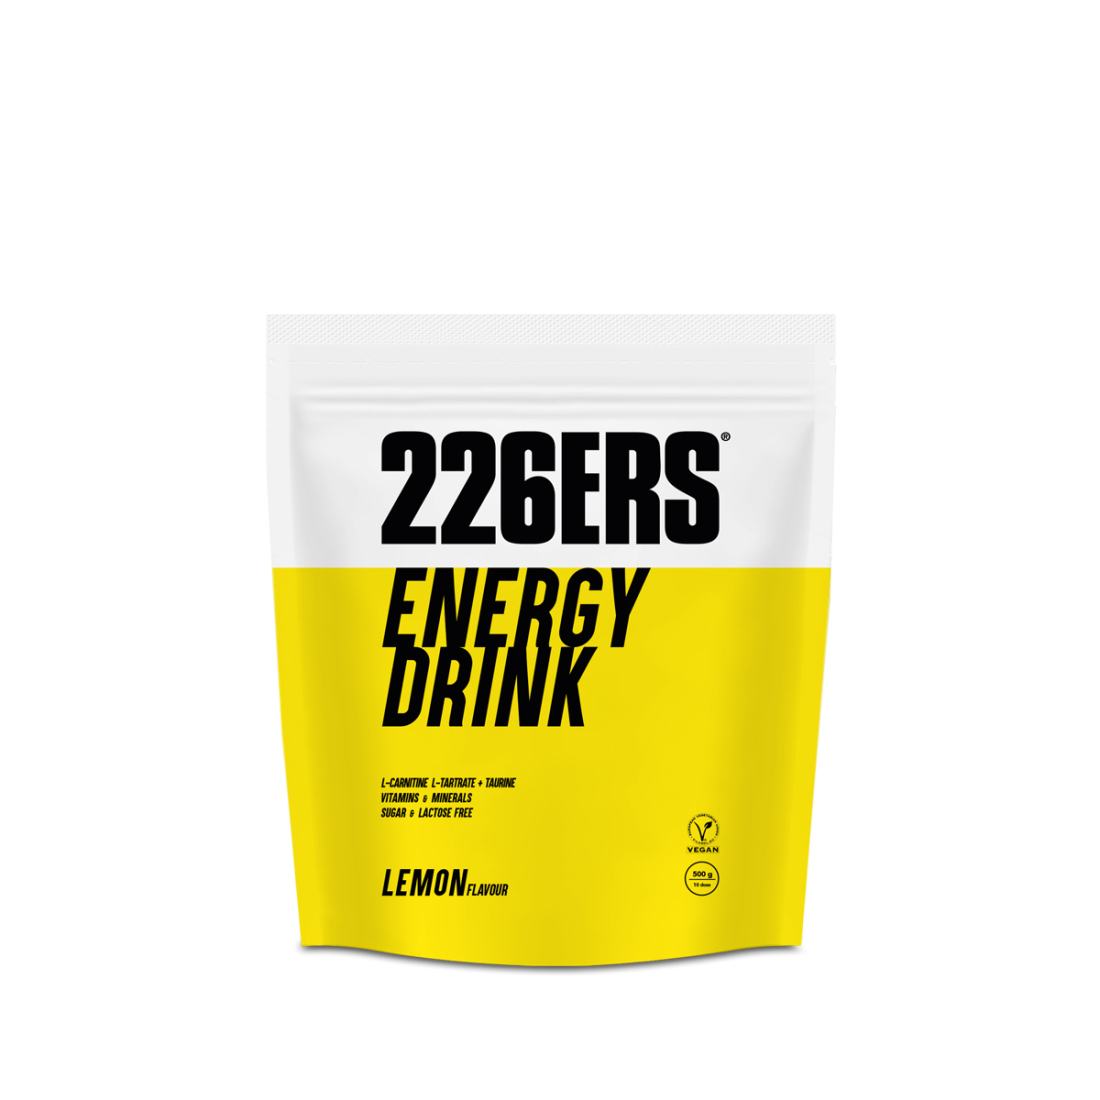 ENERGY DRINK - Energy Drink